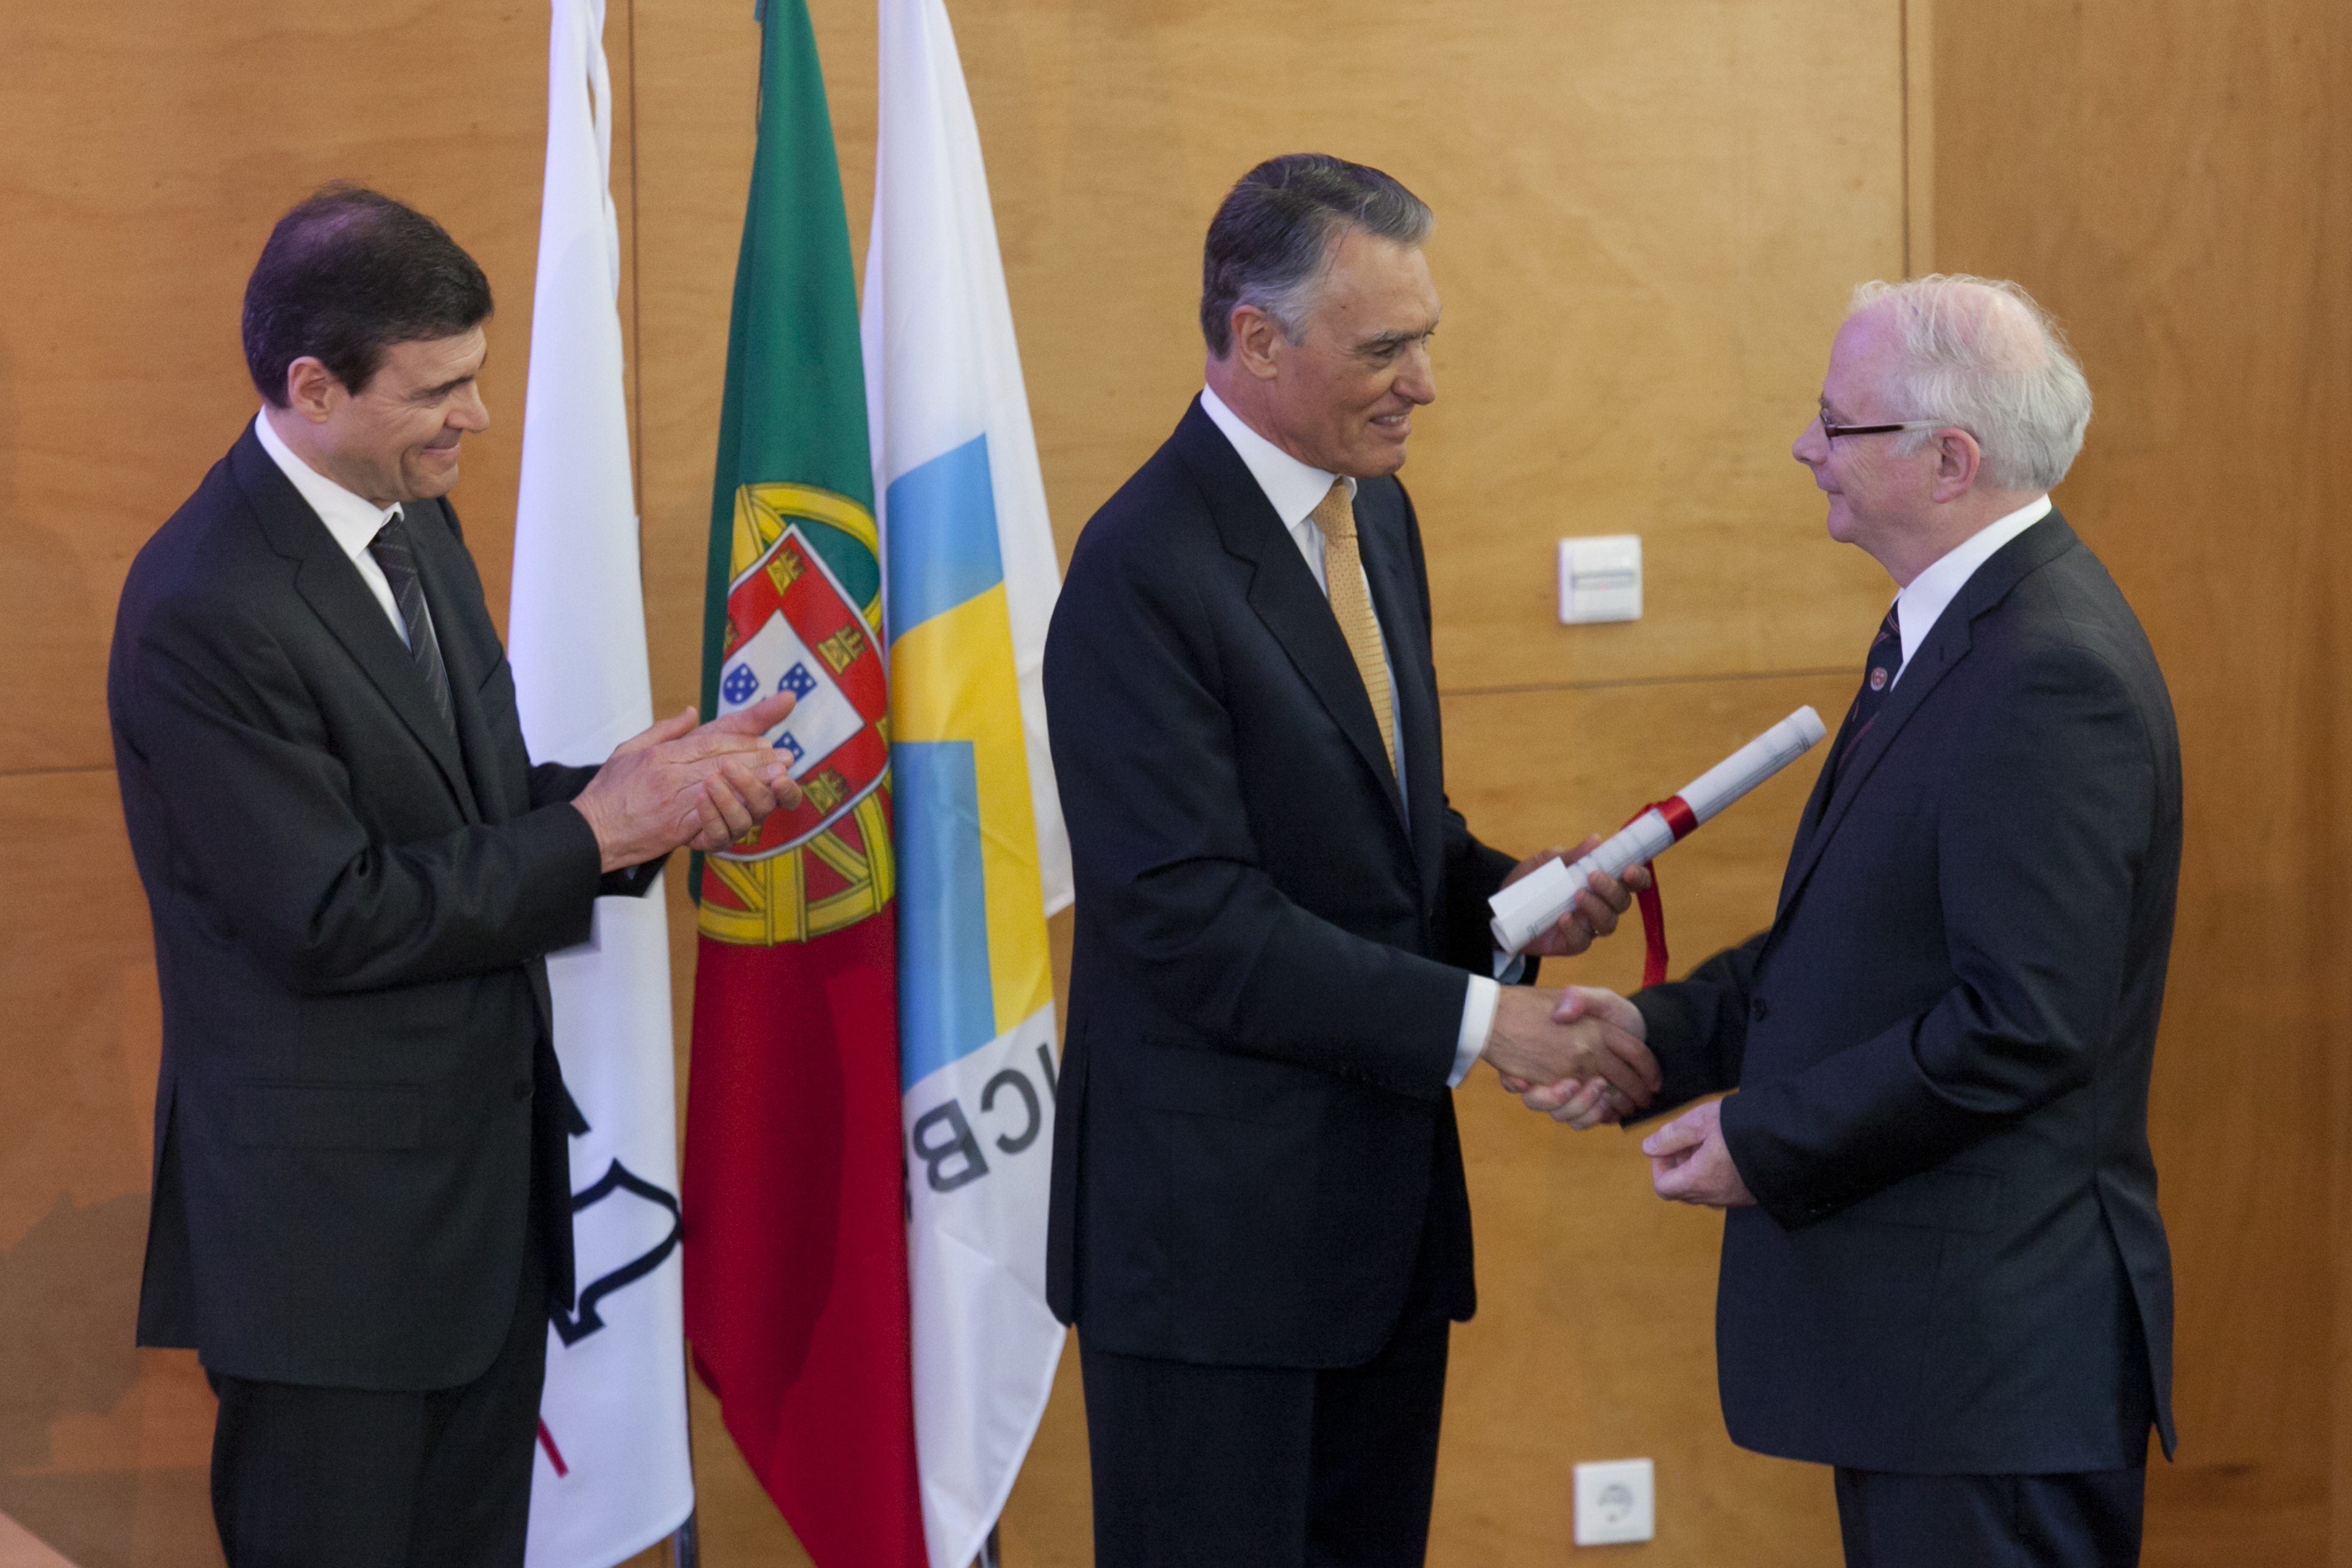 Portuguese President Aníbal António Cavaco Silva presenting Professor St George-Hyslop (far right) with his award.